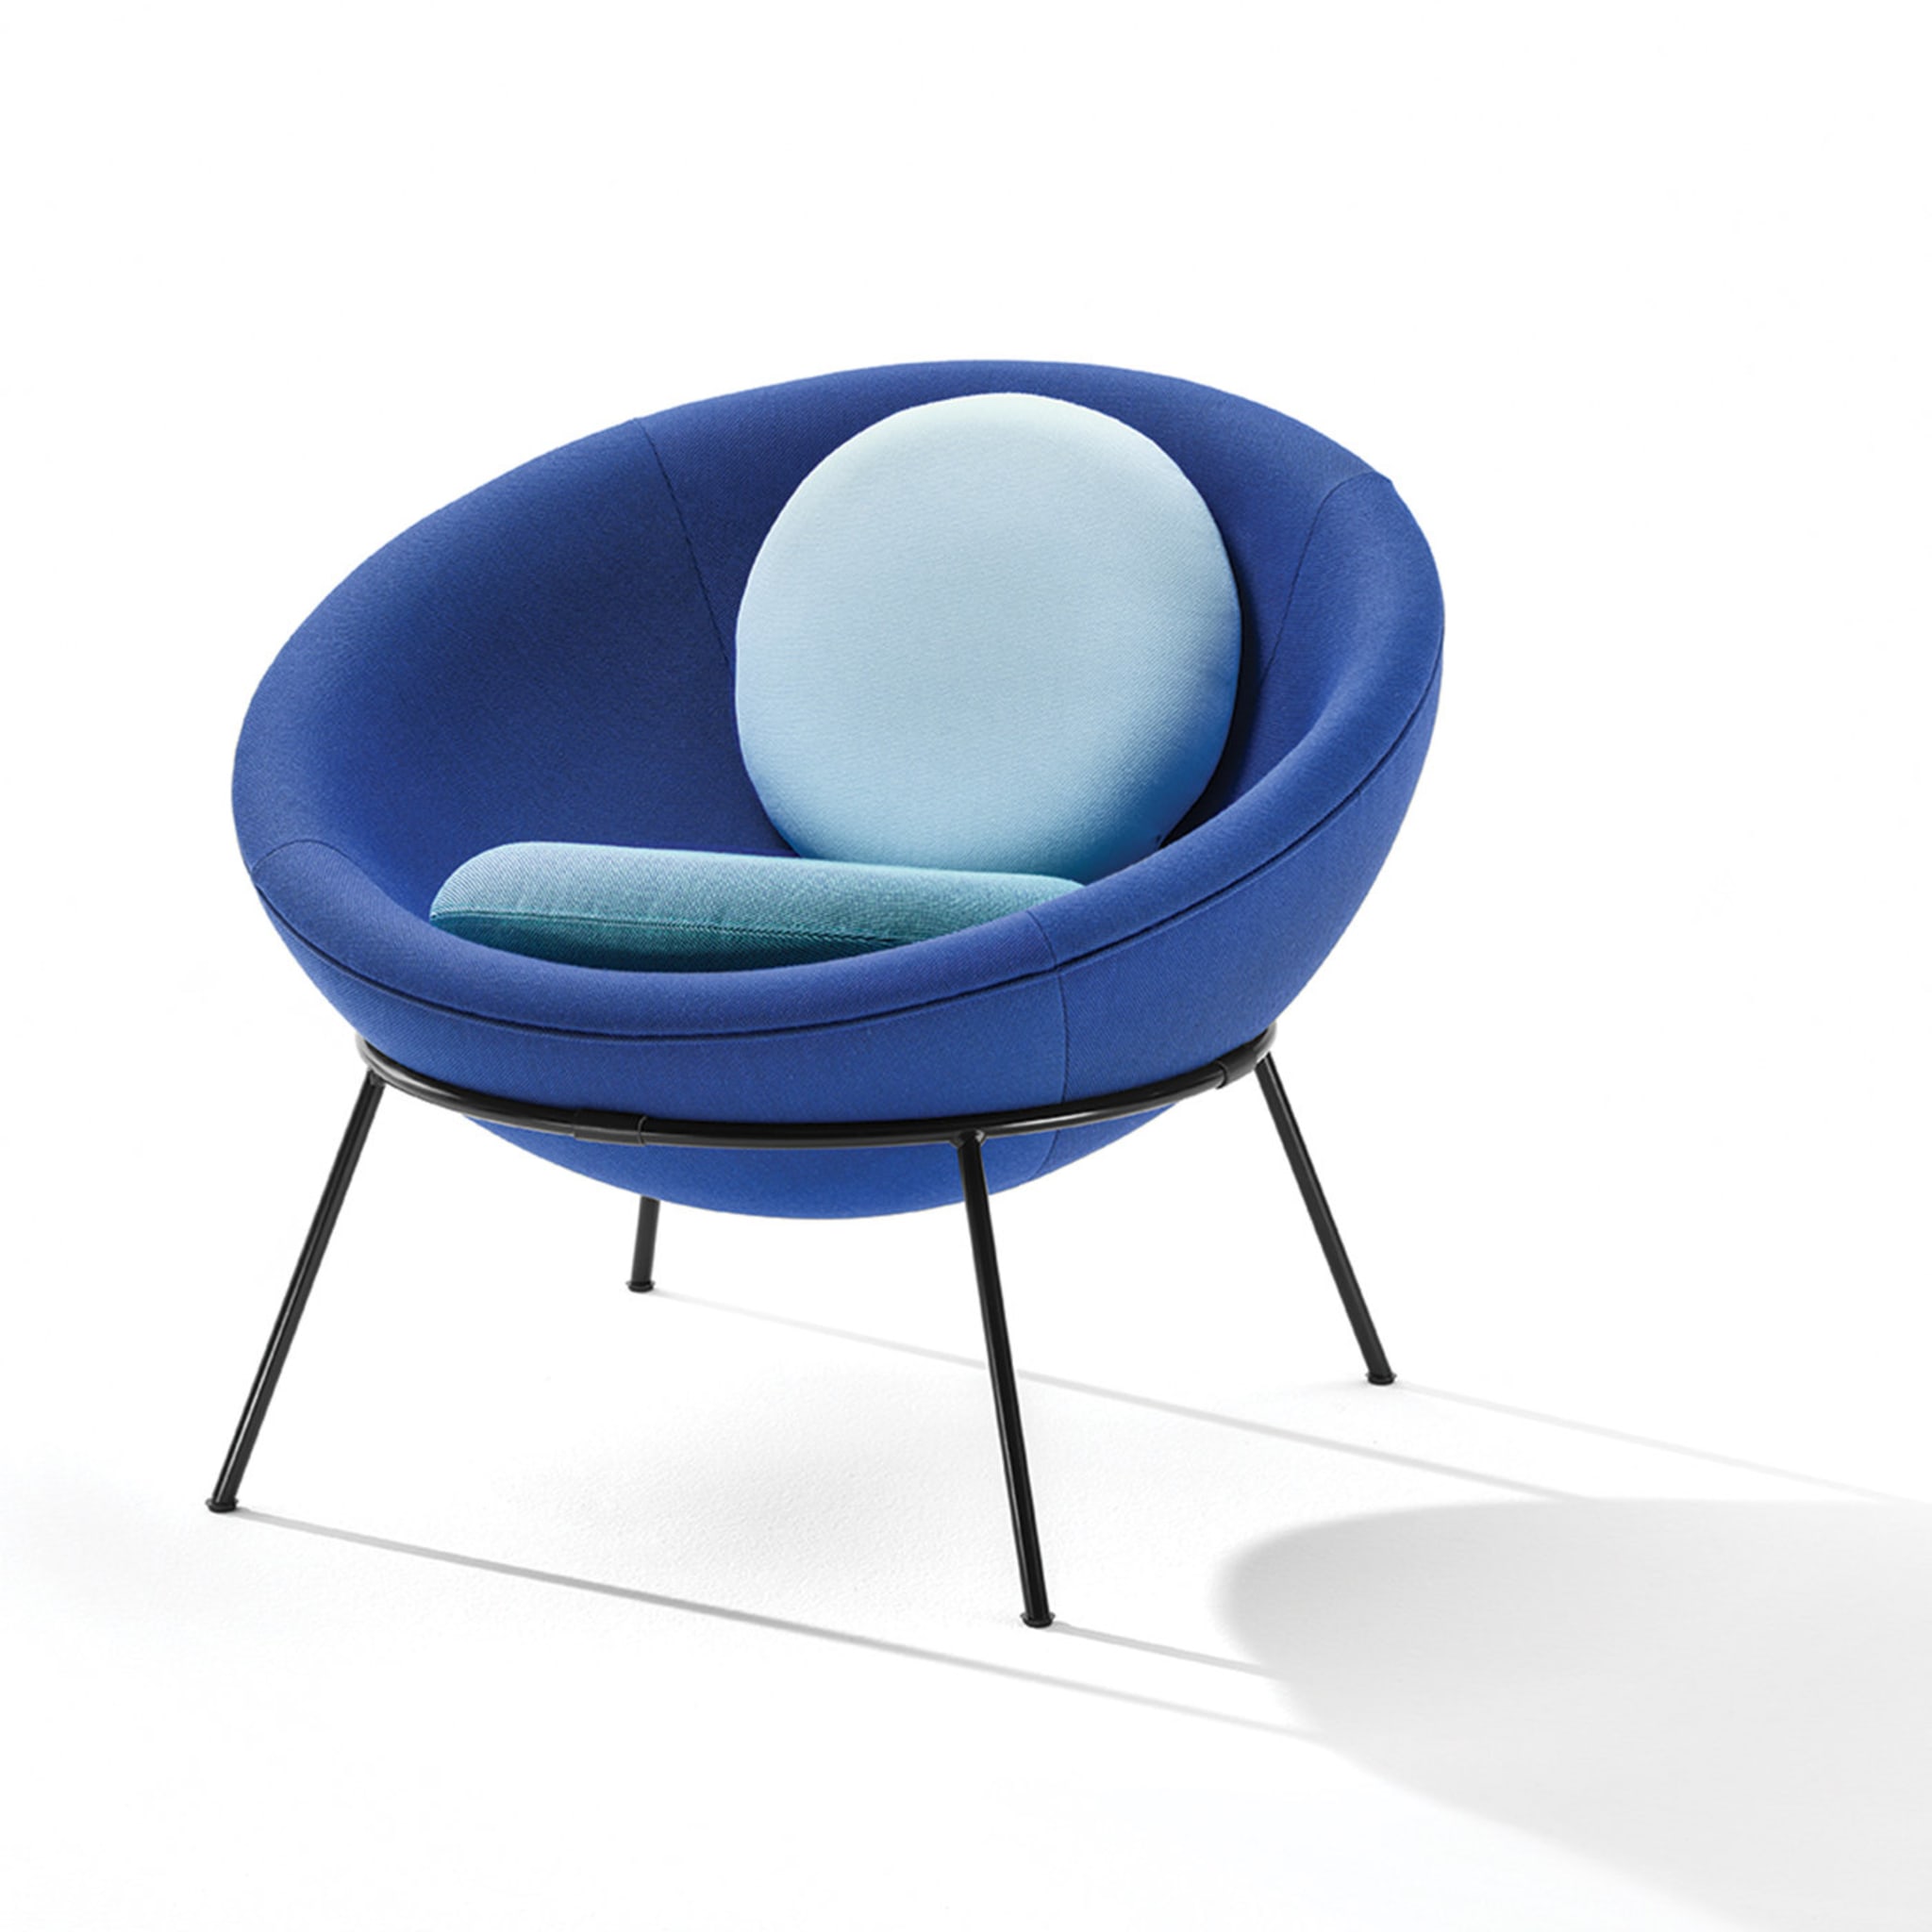 Bardi's Bowl Chair Shiny Blue Nuance - Alternative view 1